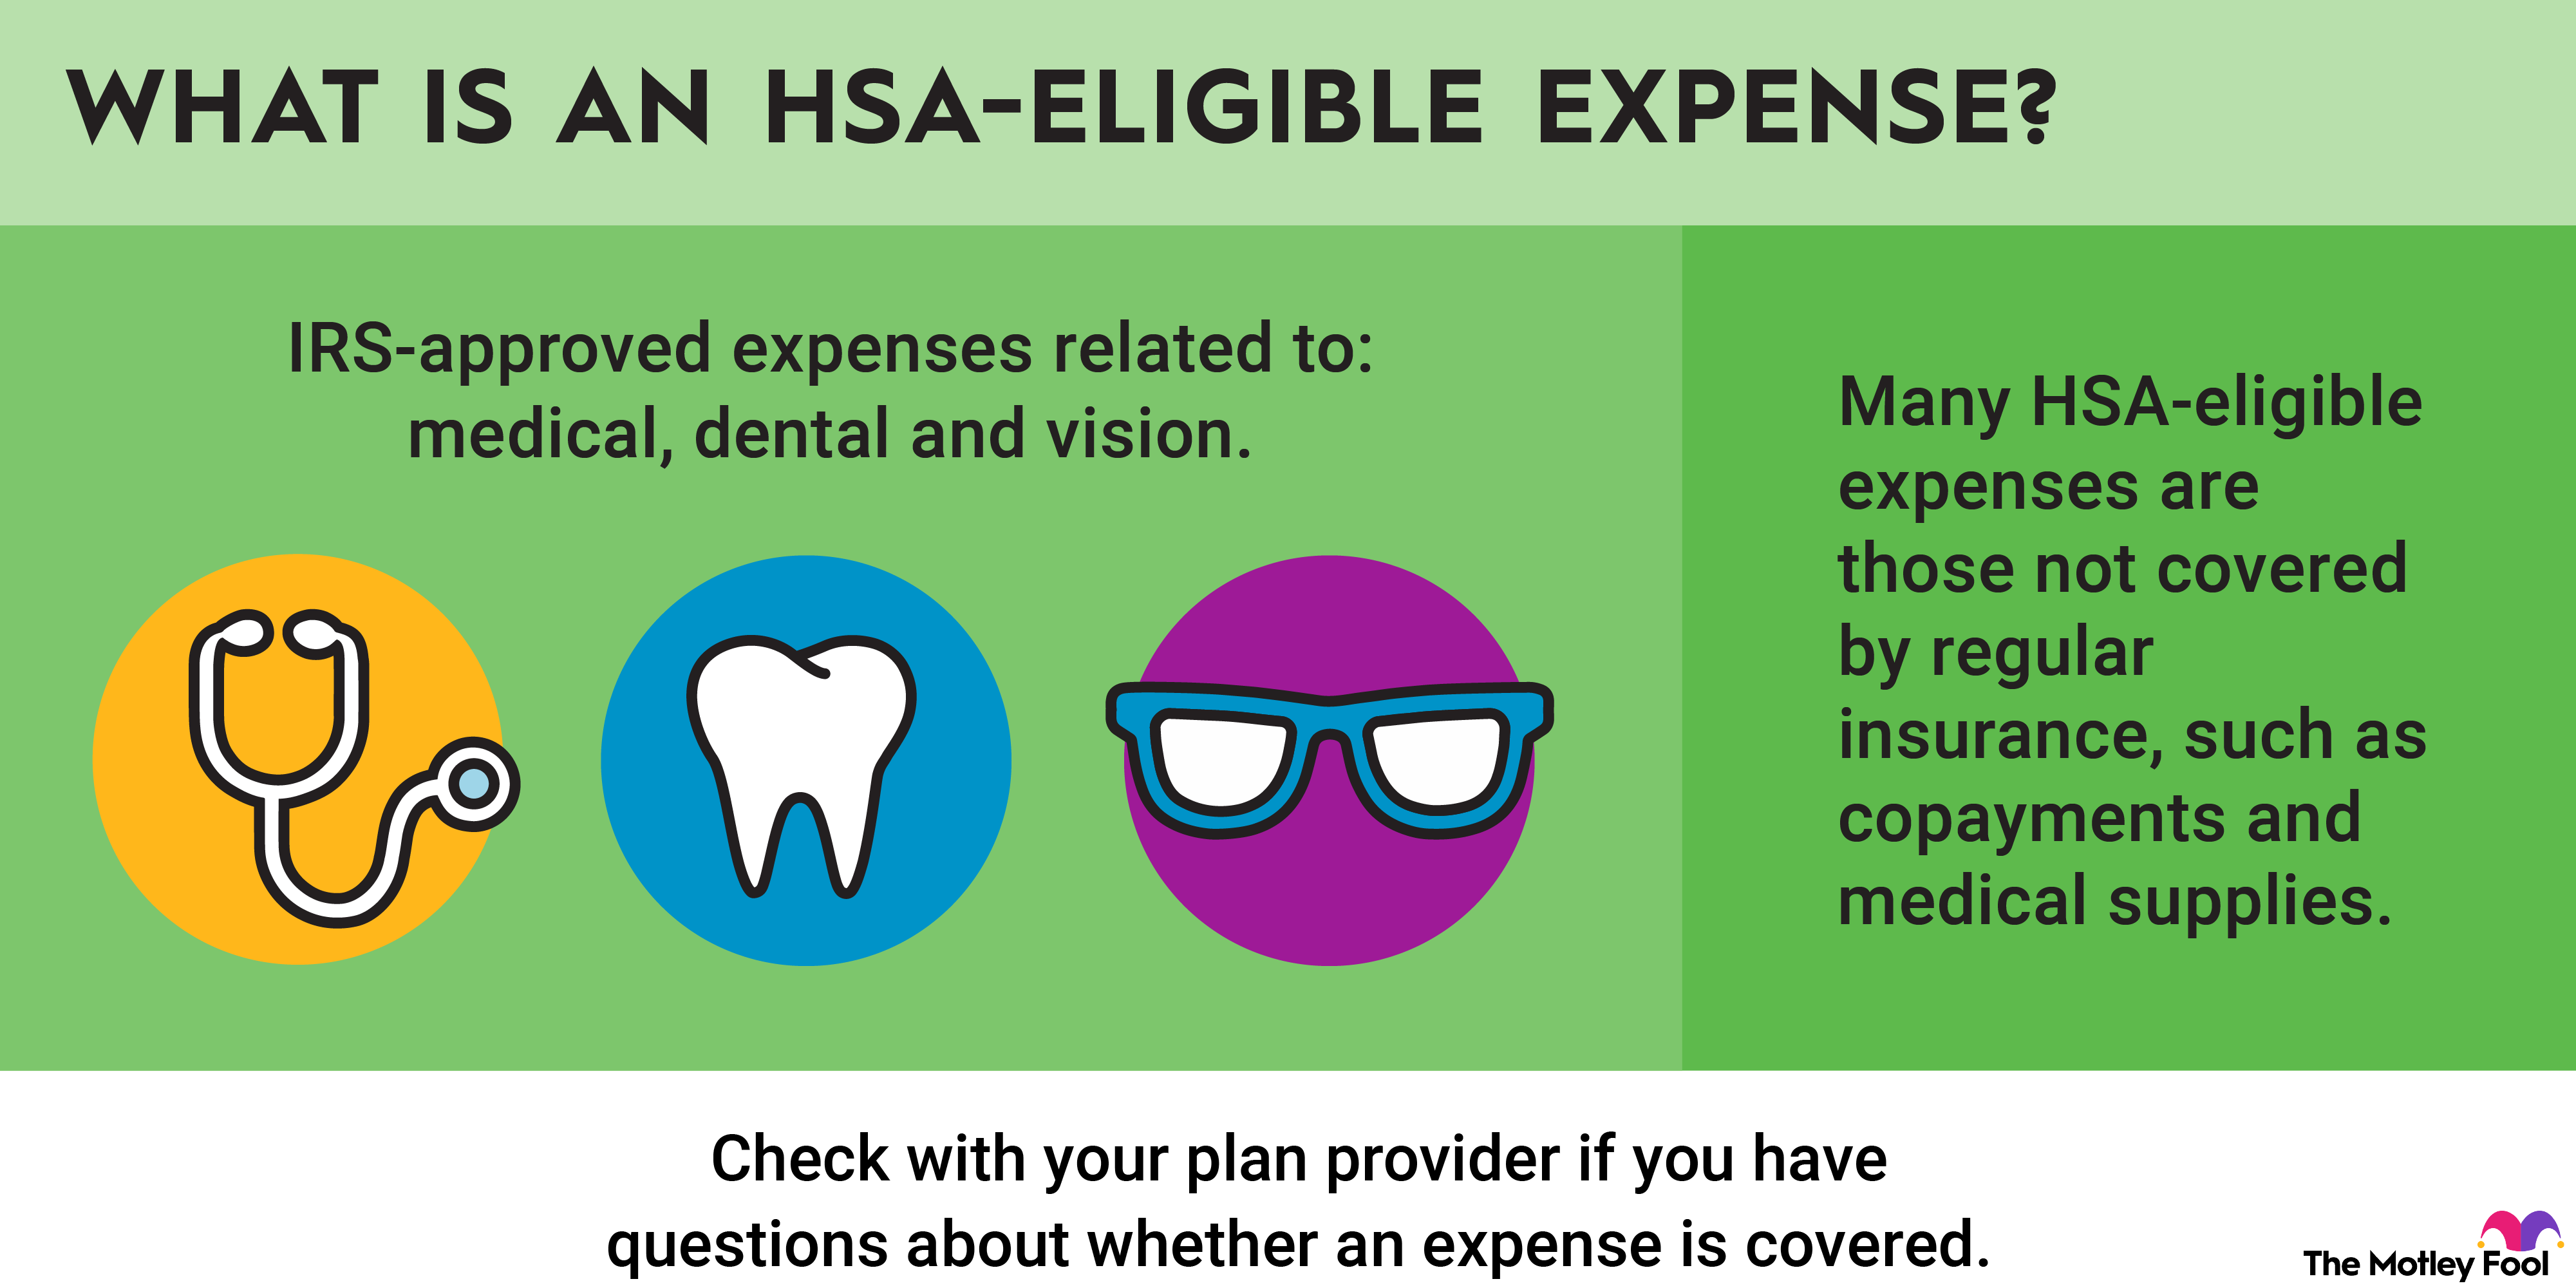 https://m.foolcdn.com/media/dubs/original_images/hsa-eligible-expenses-infographic.png